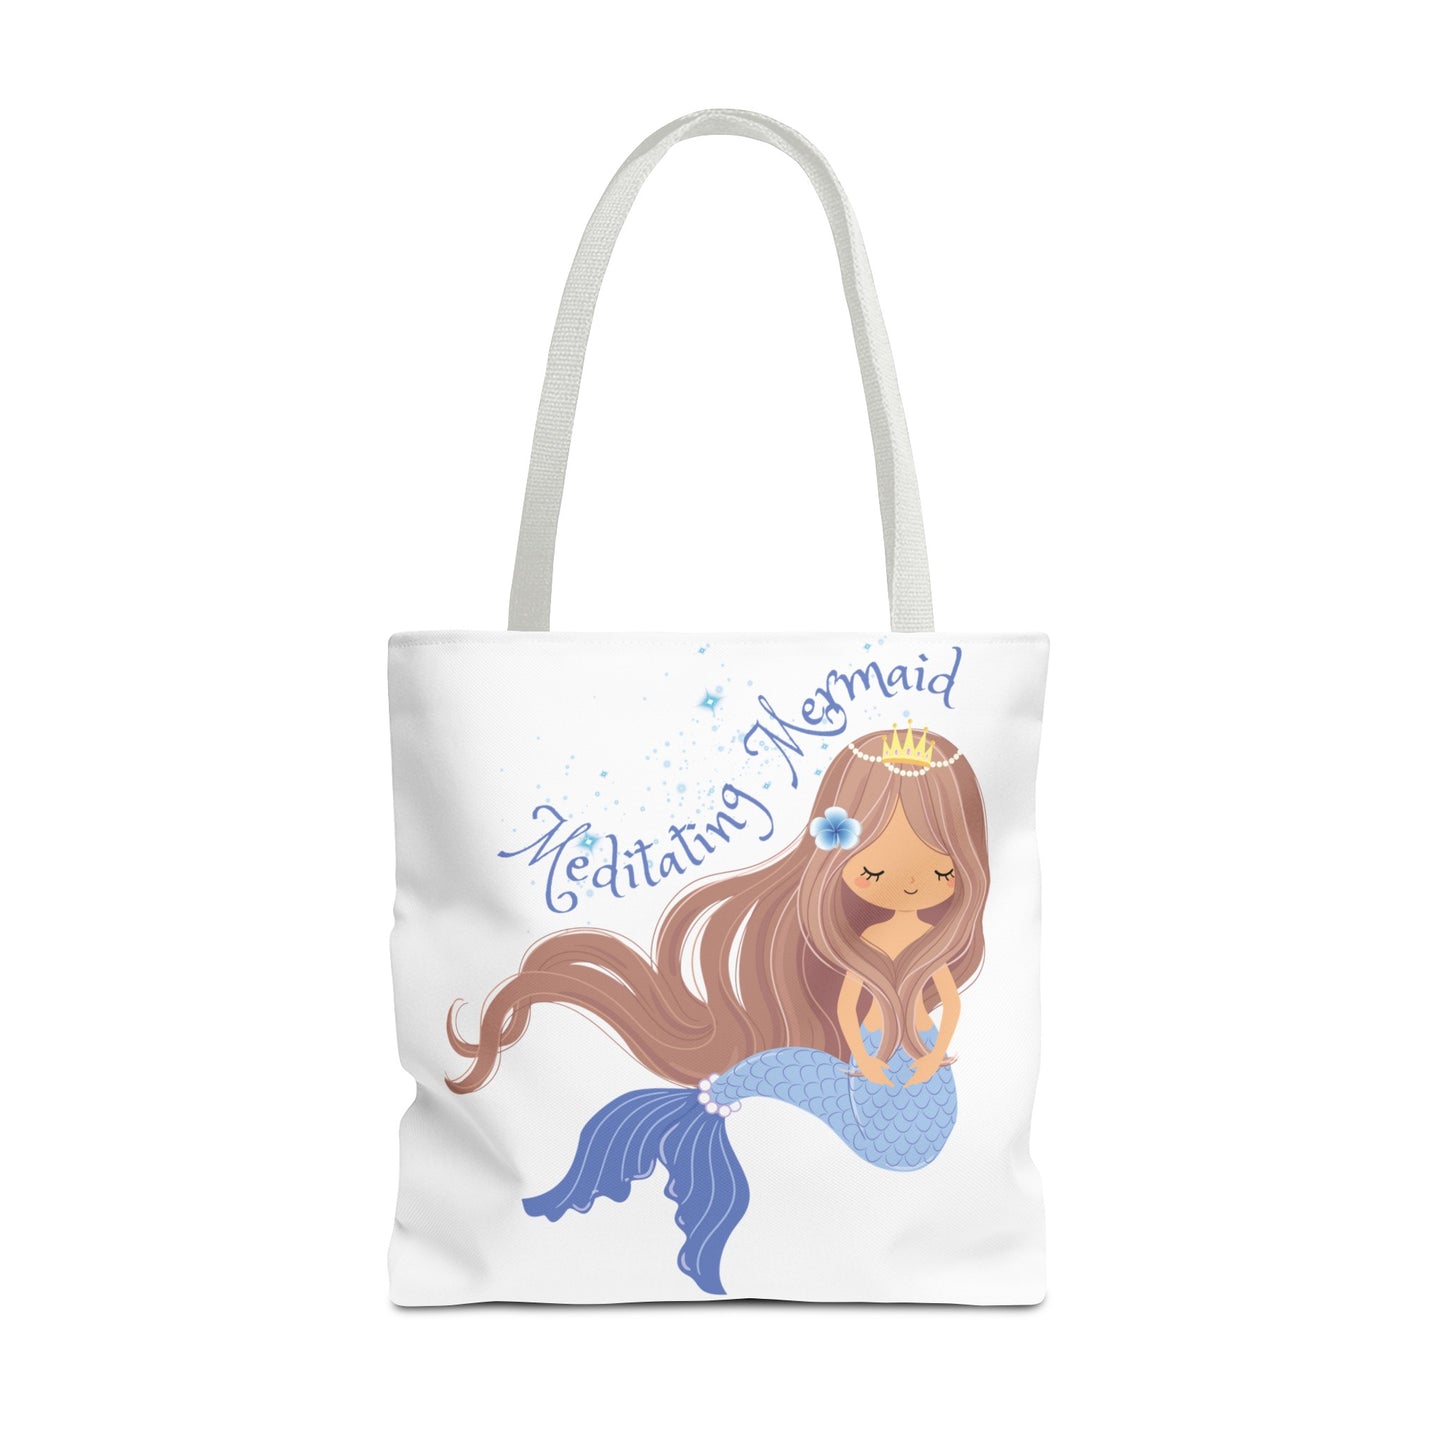 Meditating Mermaid Tote Bag - Perfect Gift For Meditation & Mermaid Lovers